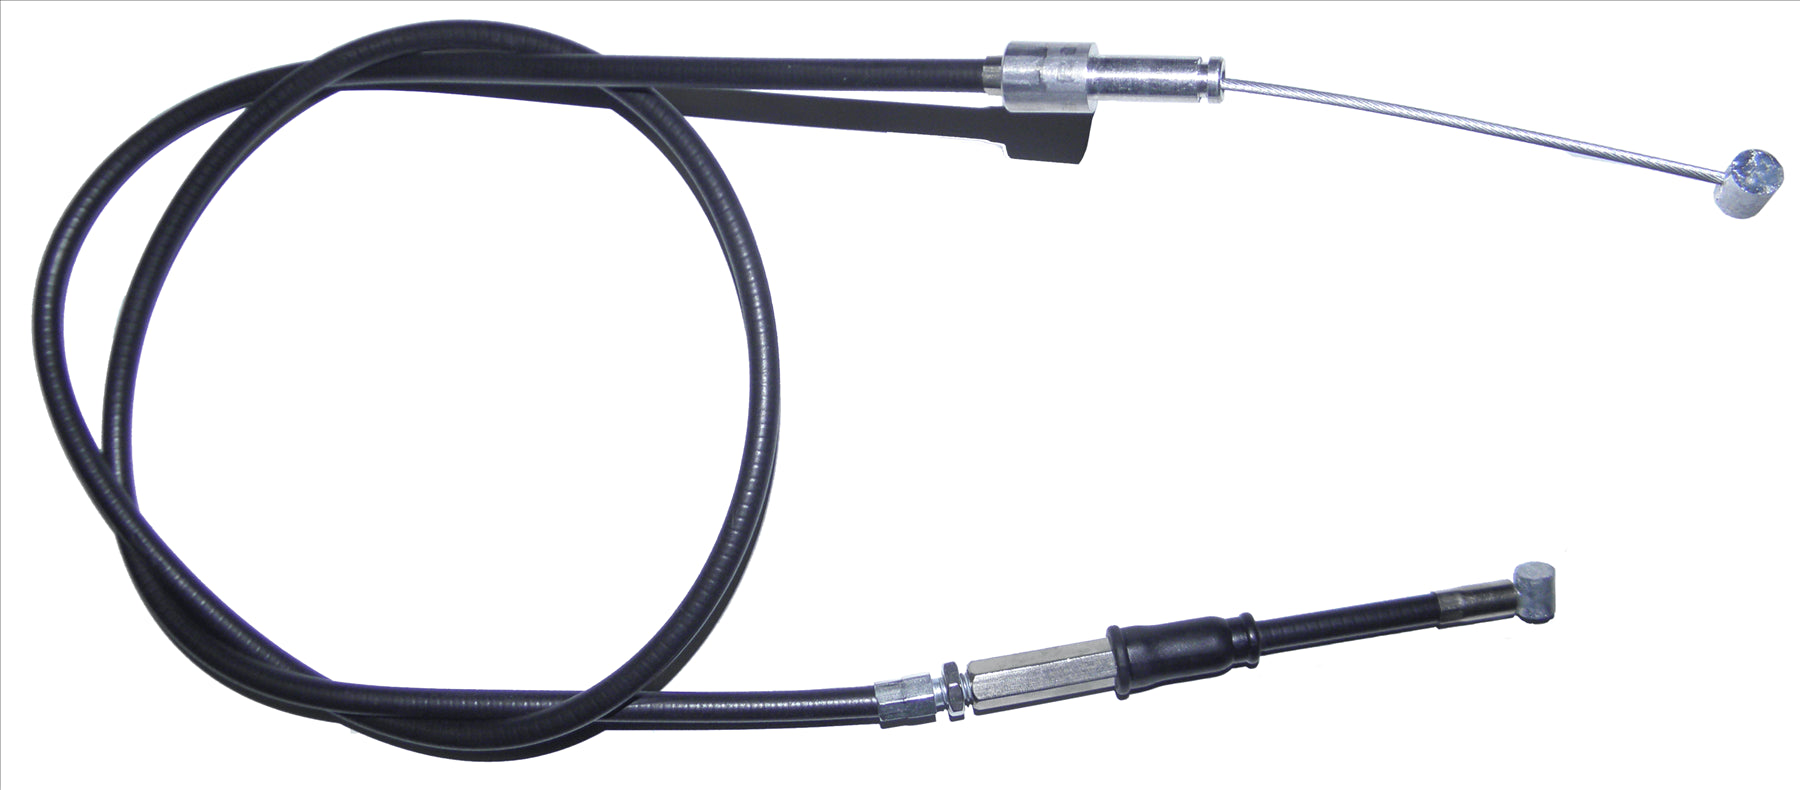 Apico Black Clutch Cable For Kawasaki KX 125 1994